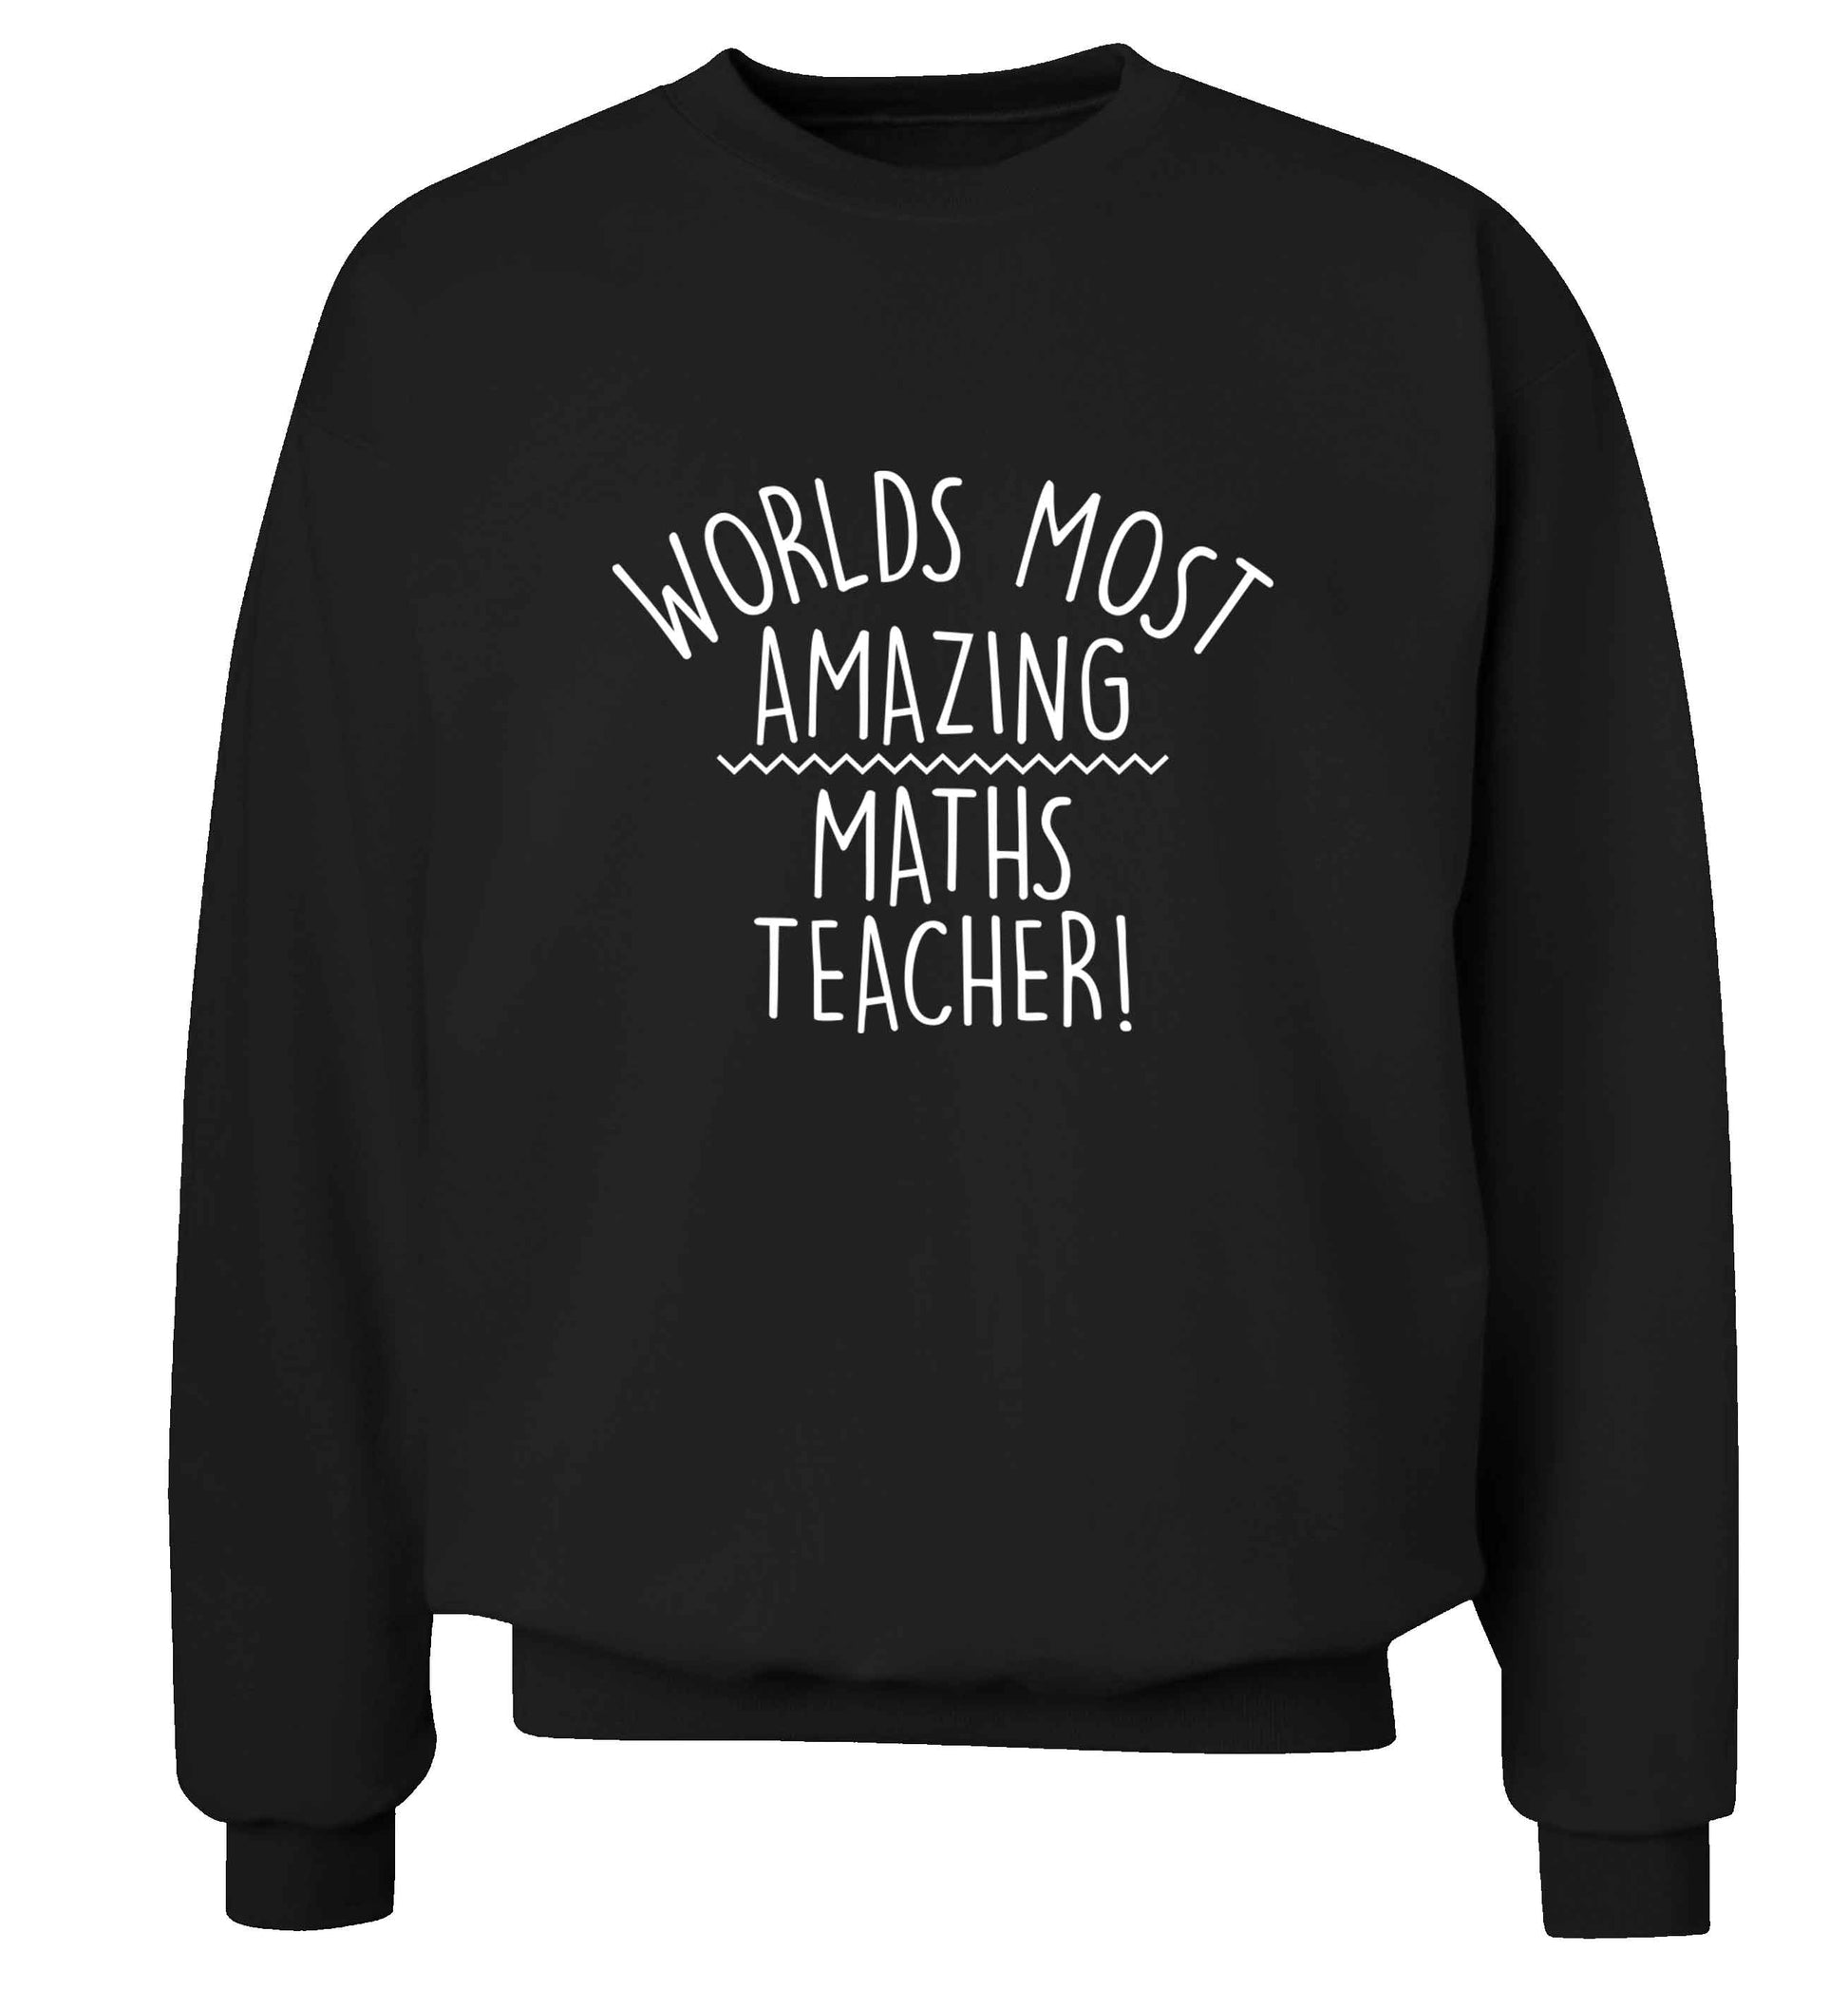 Worlds most amazing maths teacher adult's unisex black sweater 2XL